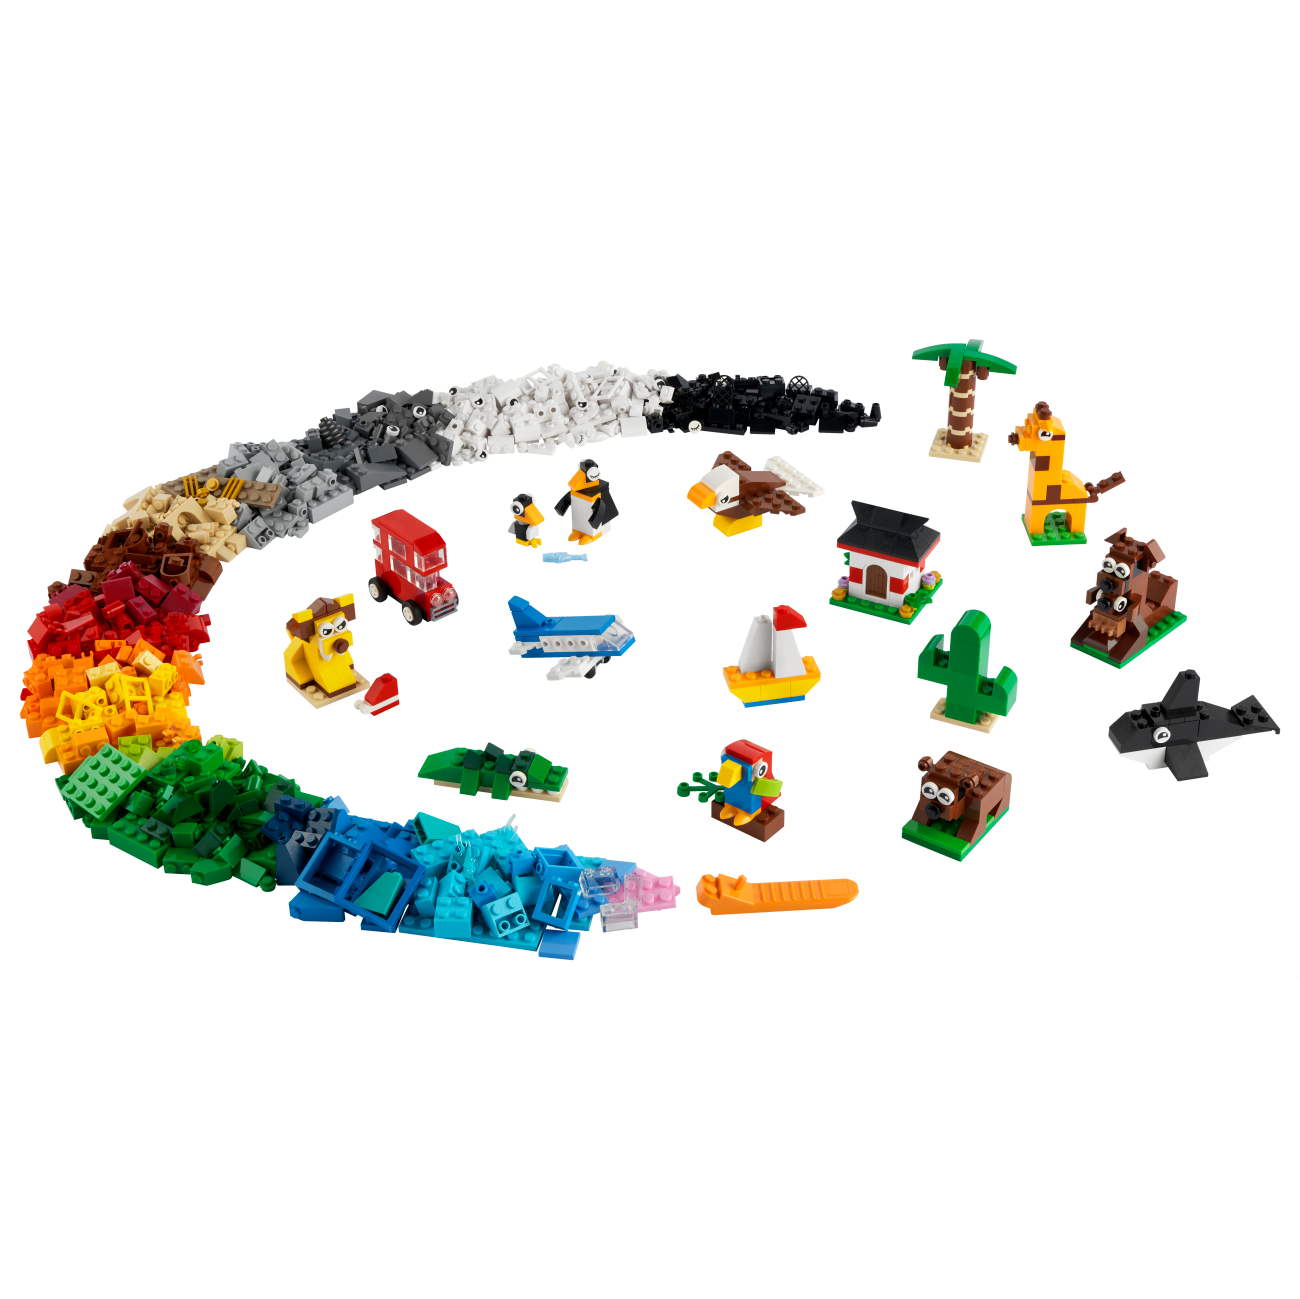 LEGO Classic 11015 - Einmal um die Welt